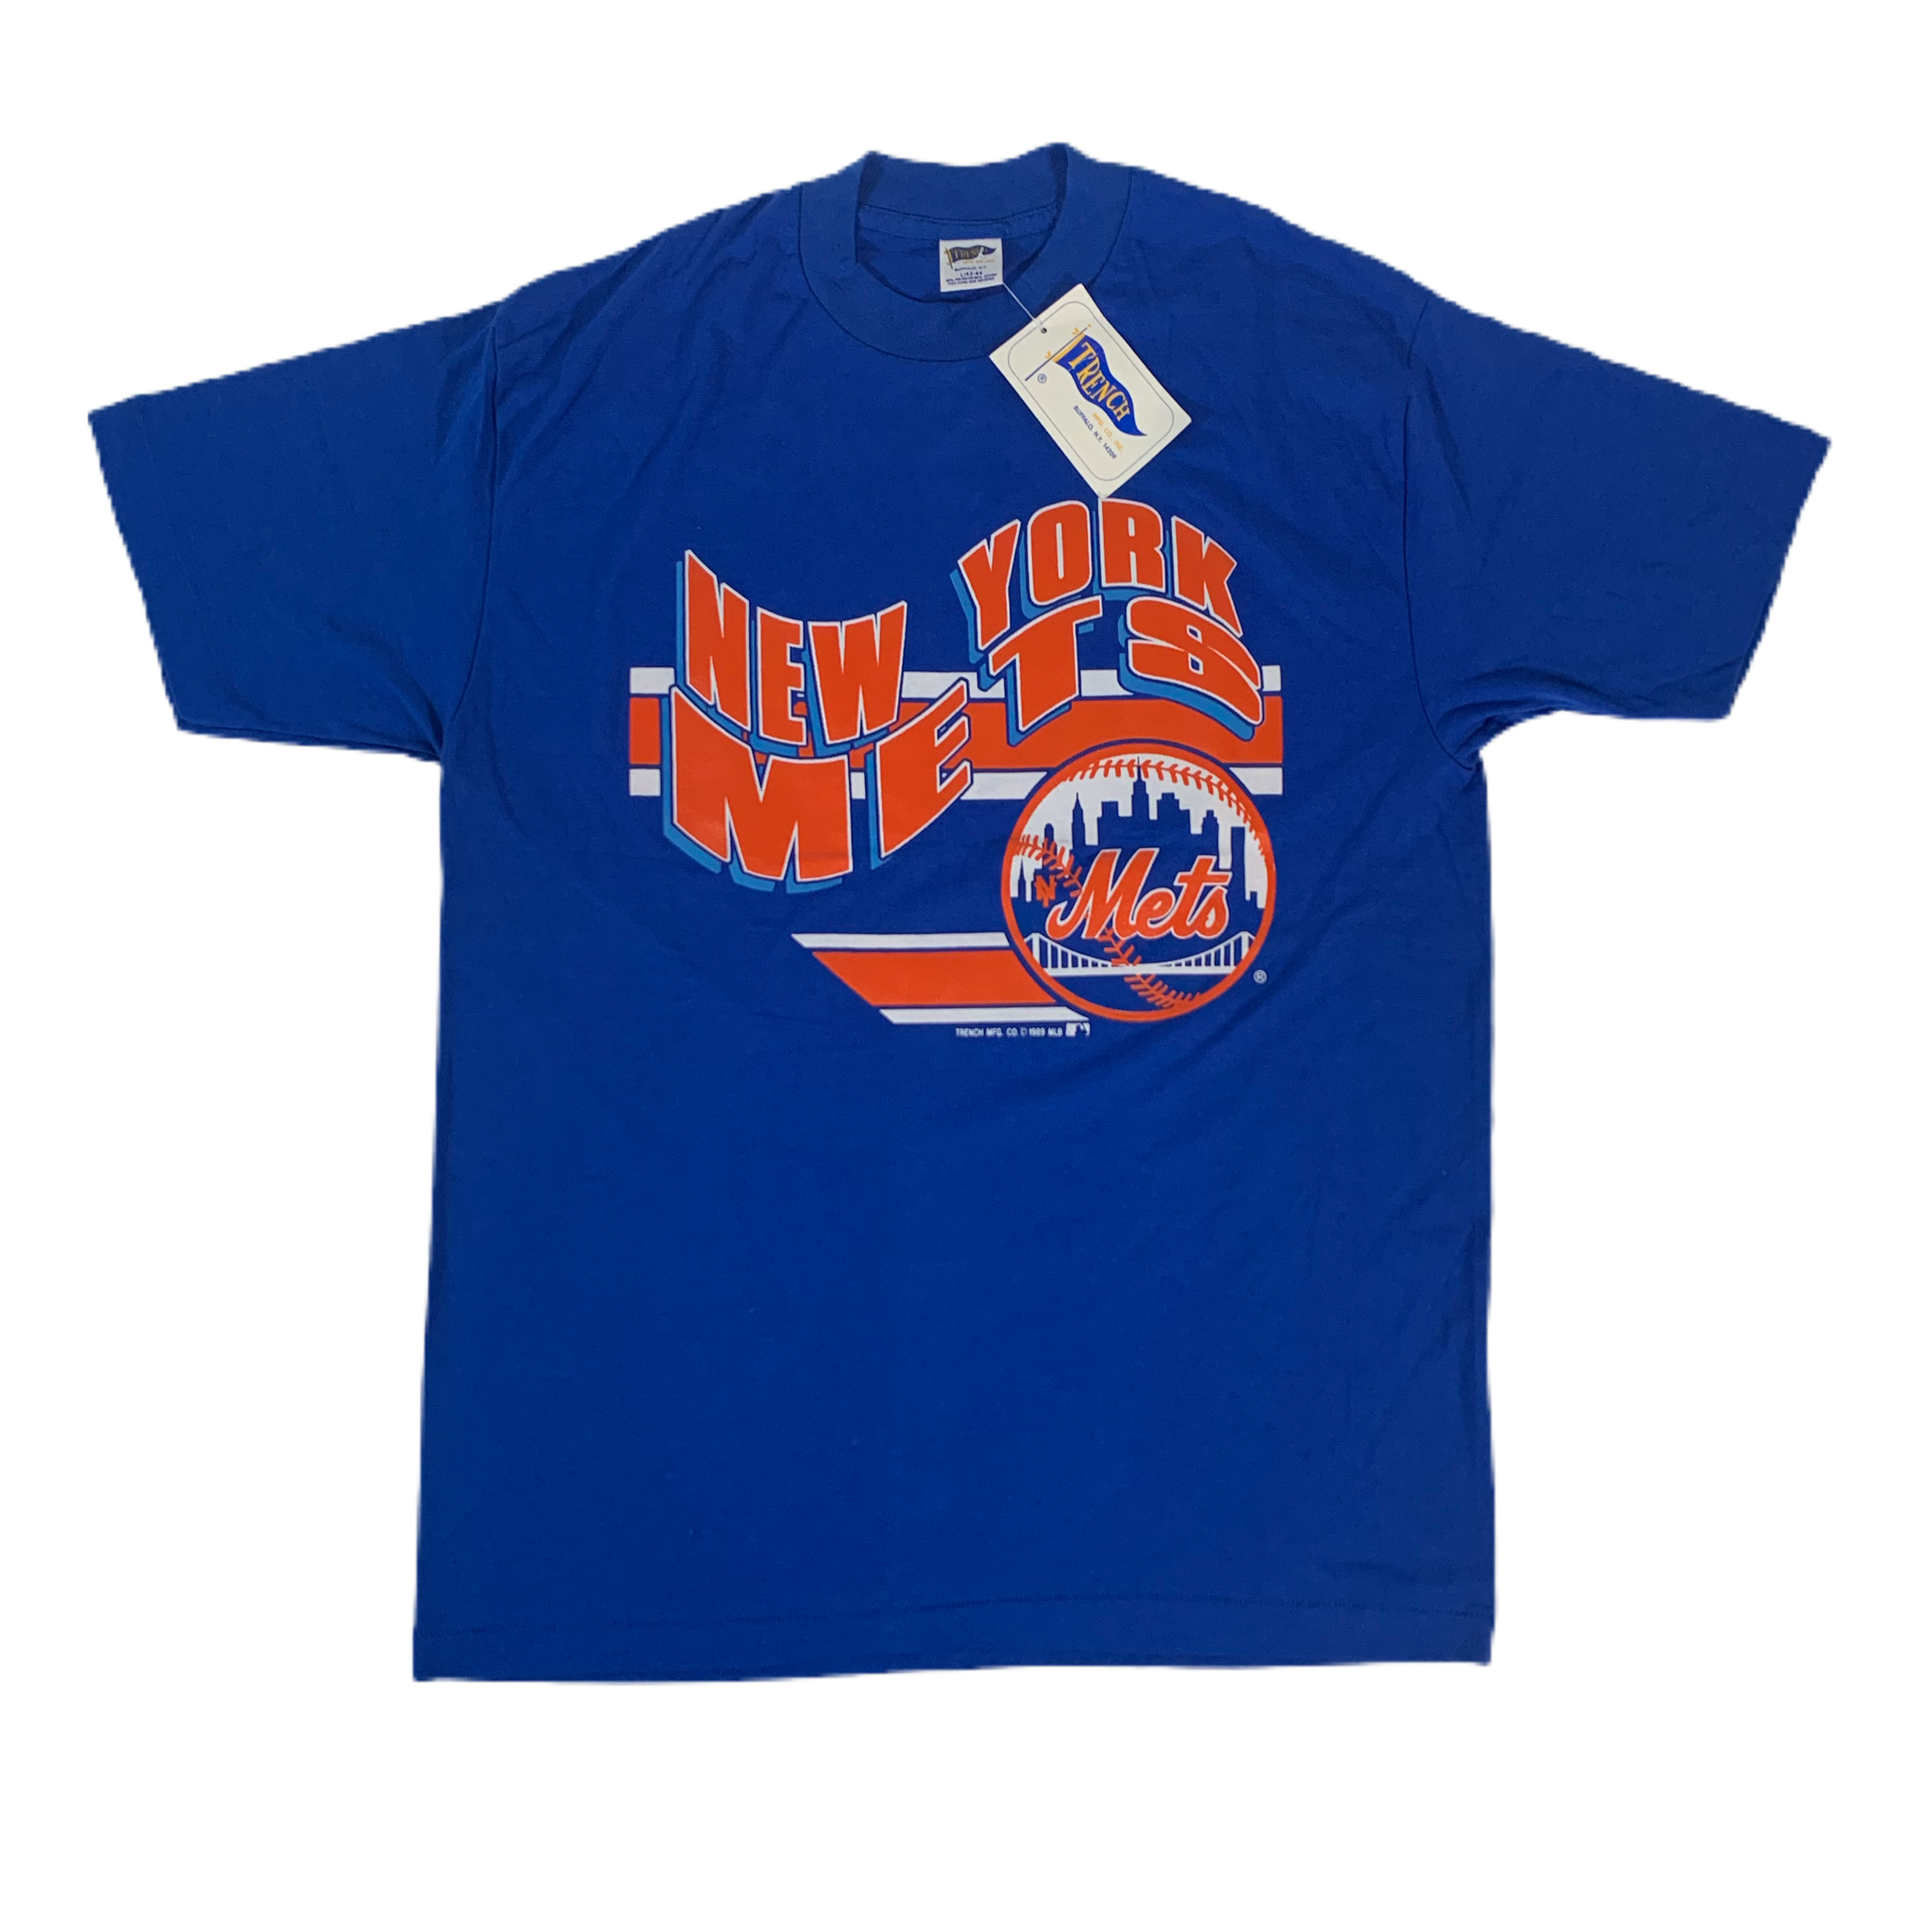 New York Mets MLB 1962 Baseball Club T-shirt Blue Color Tee 